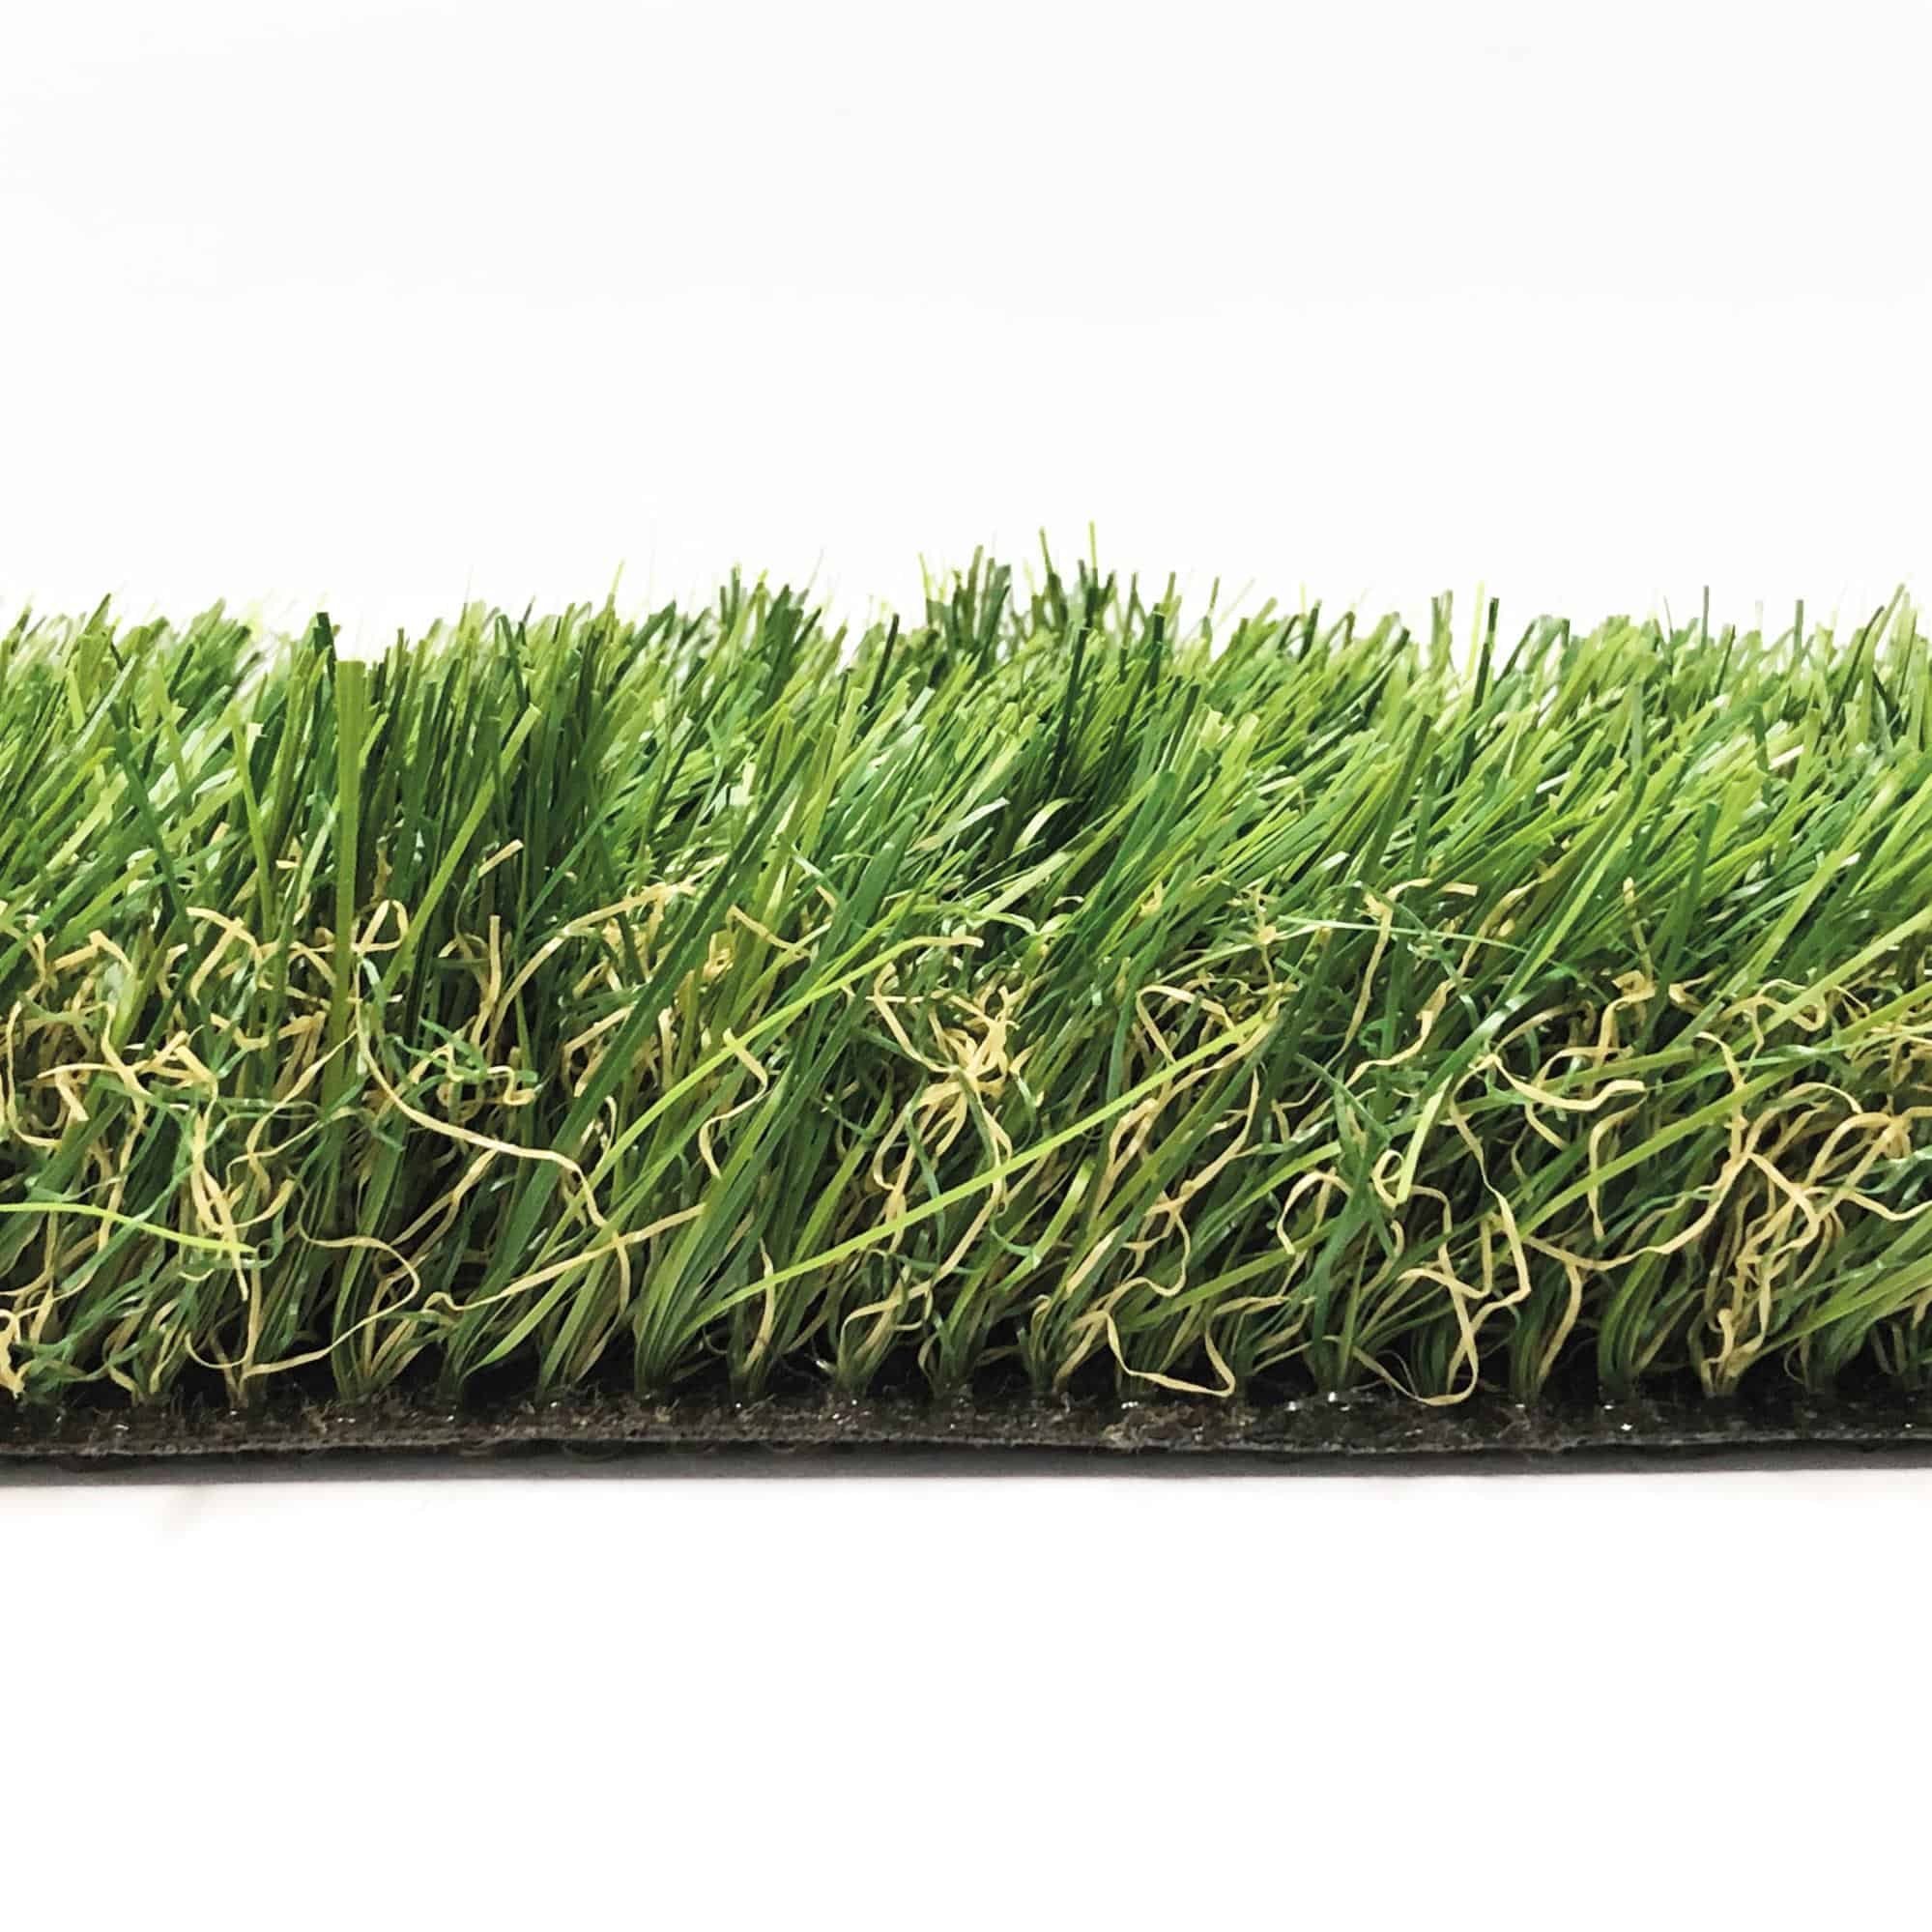 CORE Lawn Natural Artificial Grass 4m Wide Roll 9 m